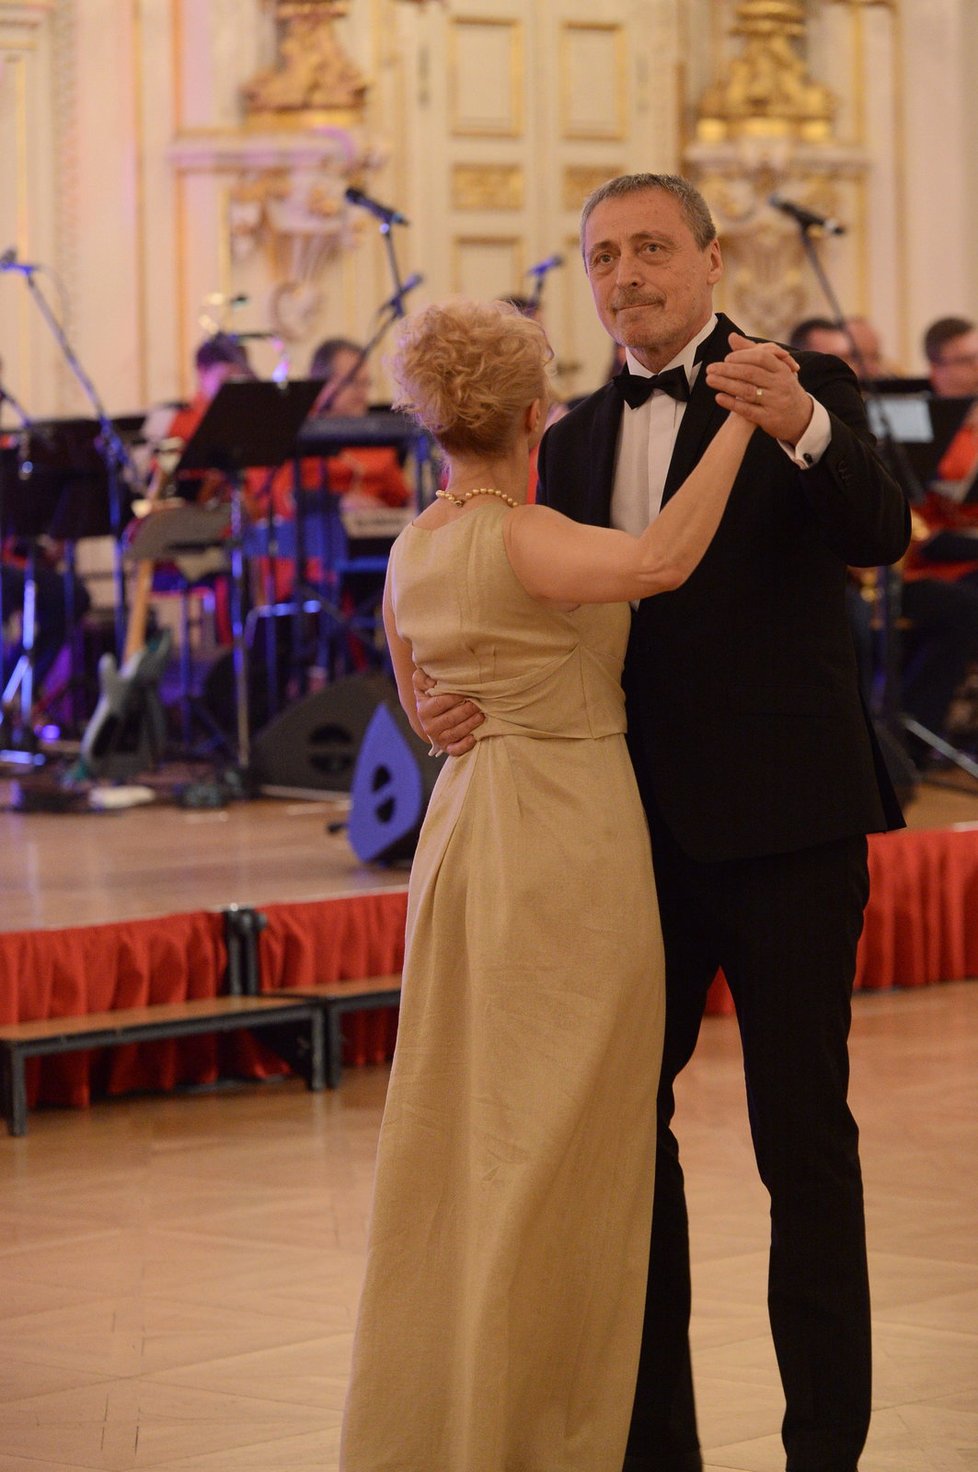 Ples na Hradě: Ministr obrany Martin Stropnický s ženou Veronikou Žilkovou (2017)